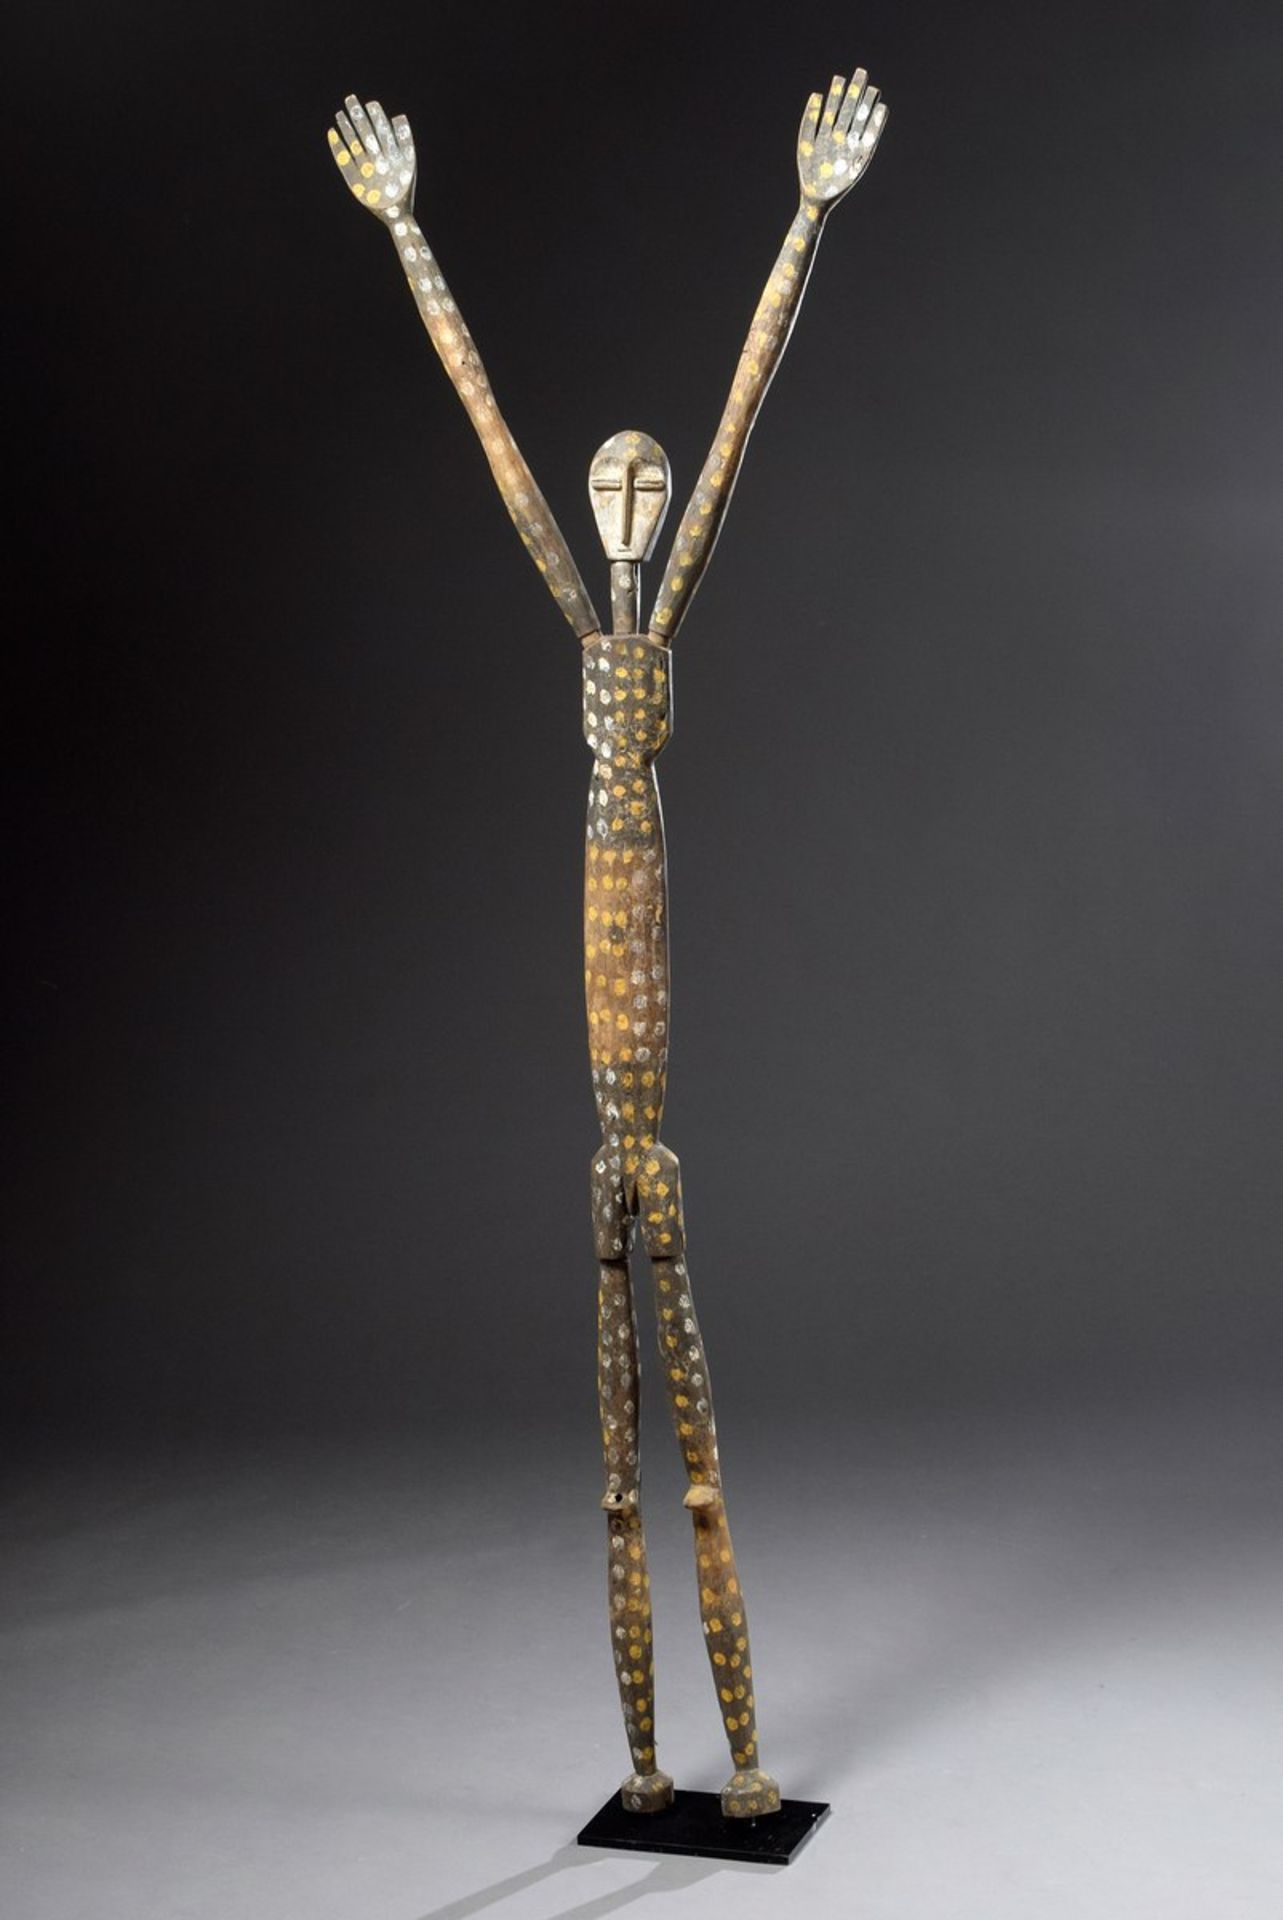 Large Lengola figure "Umbanga Nyama" representing the ancestor "Suway" (the large statues, also cal